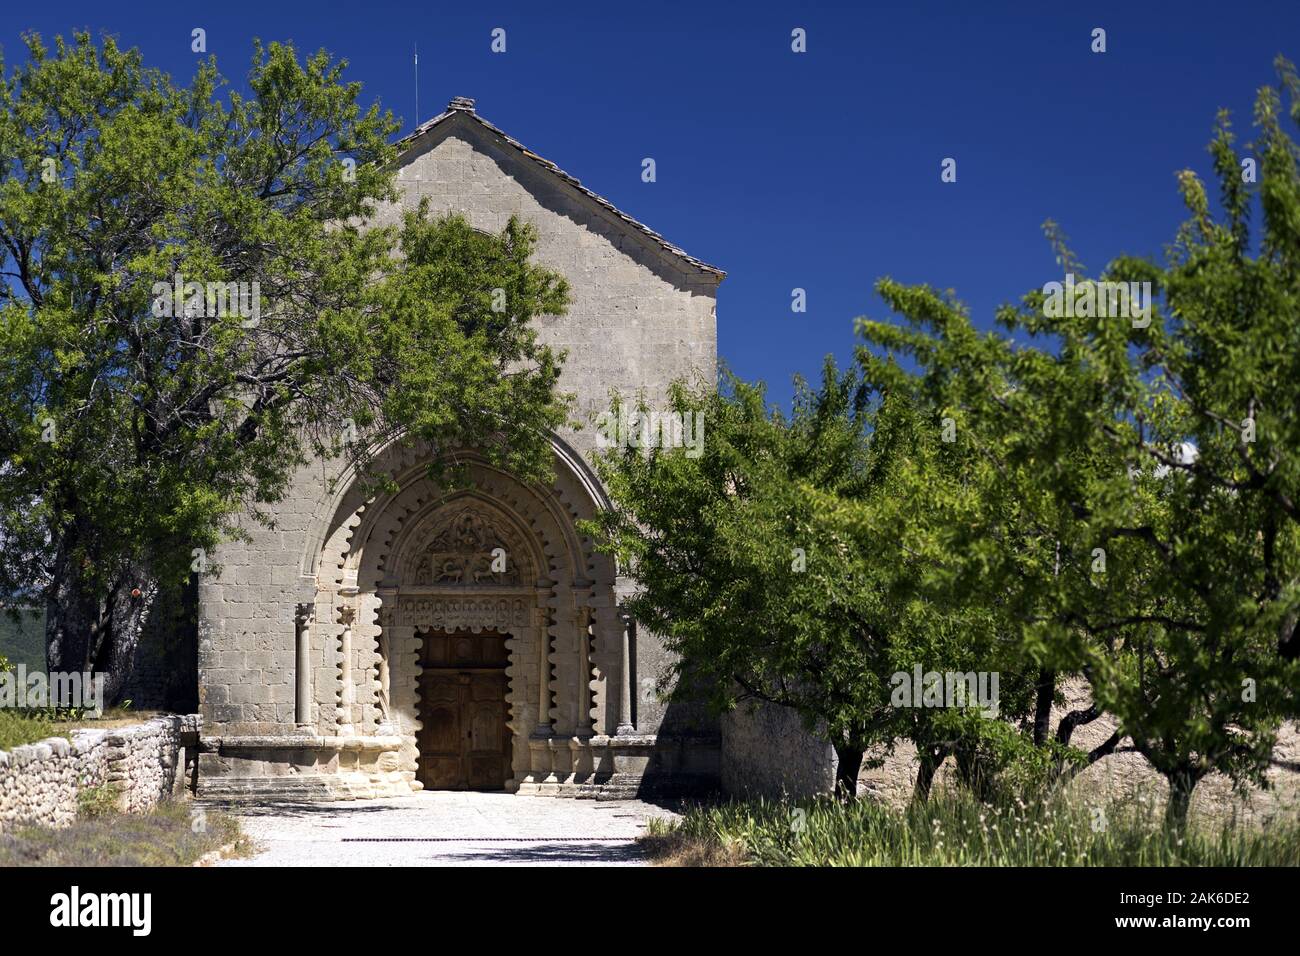 Ganagobie : Portal der Abteikirche, Provence | Le monde d'utilisation Banque D'Images